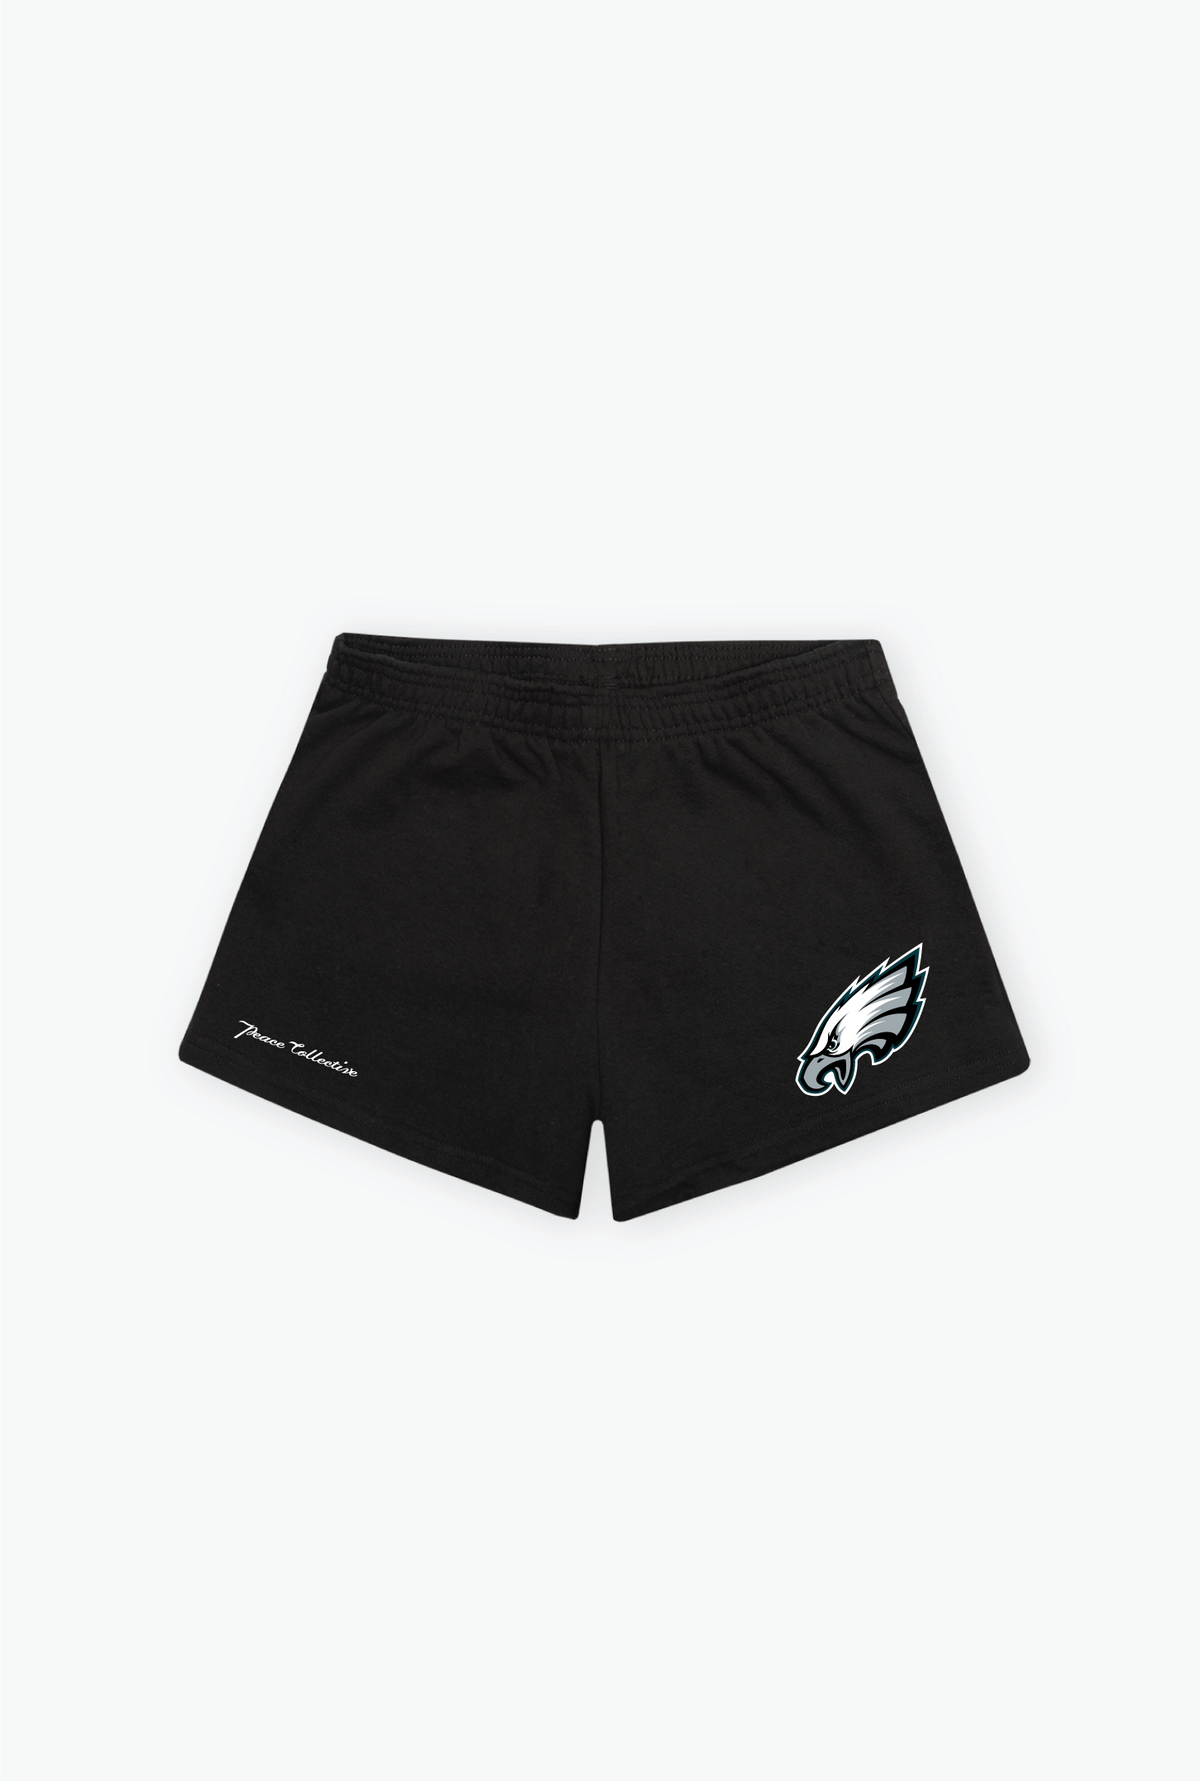 Philadelphia Eagles Women's Fleece Shorts - Black